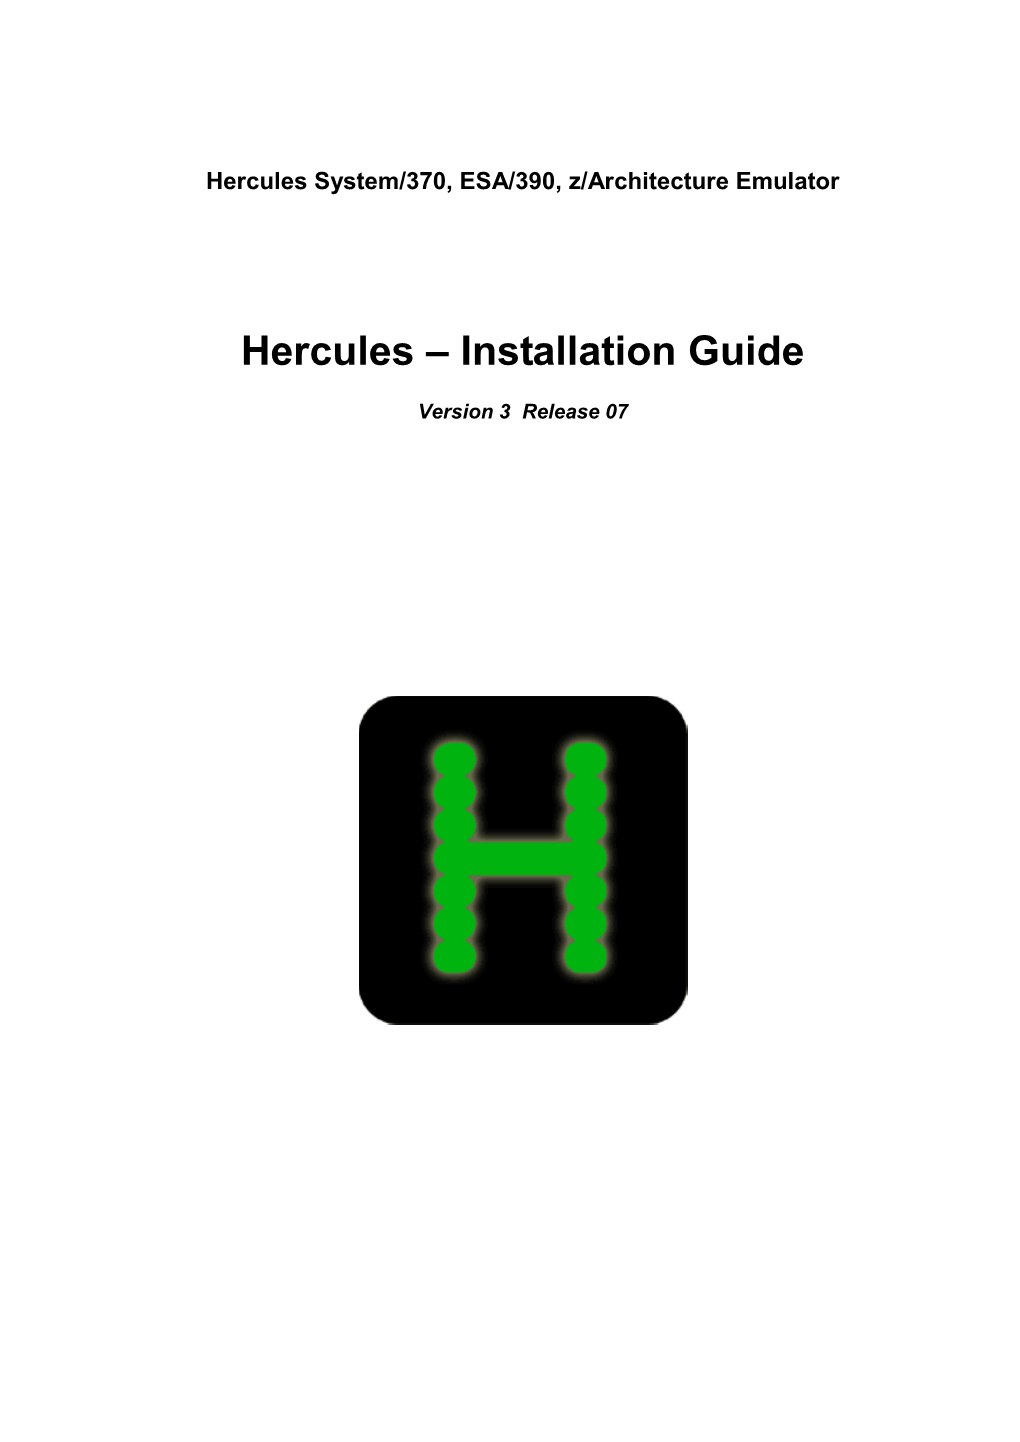 Hercules Installation Guide